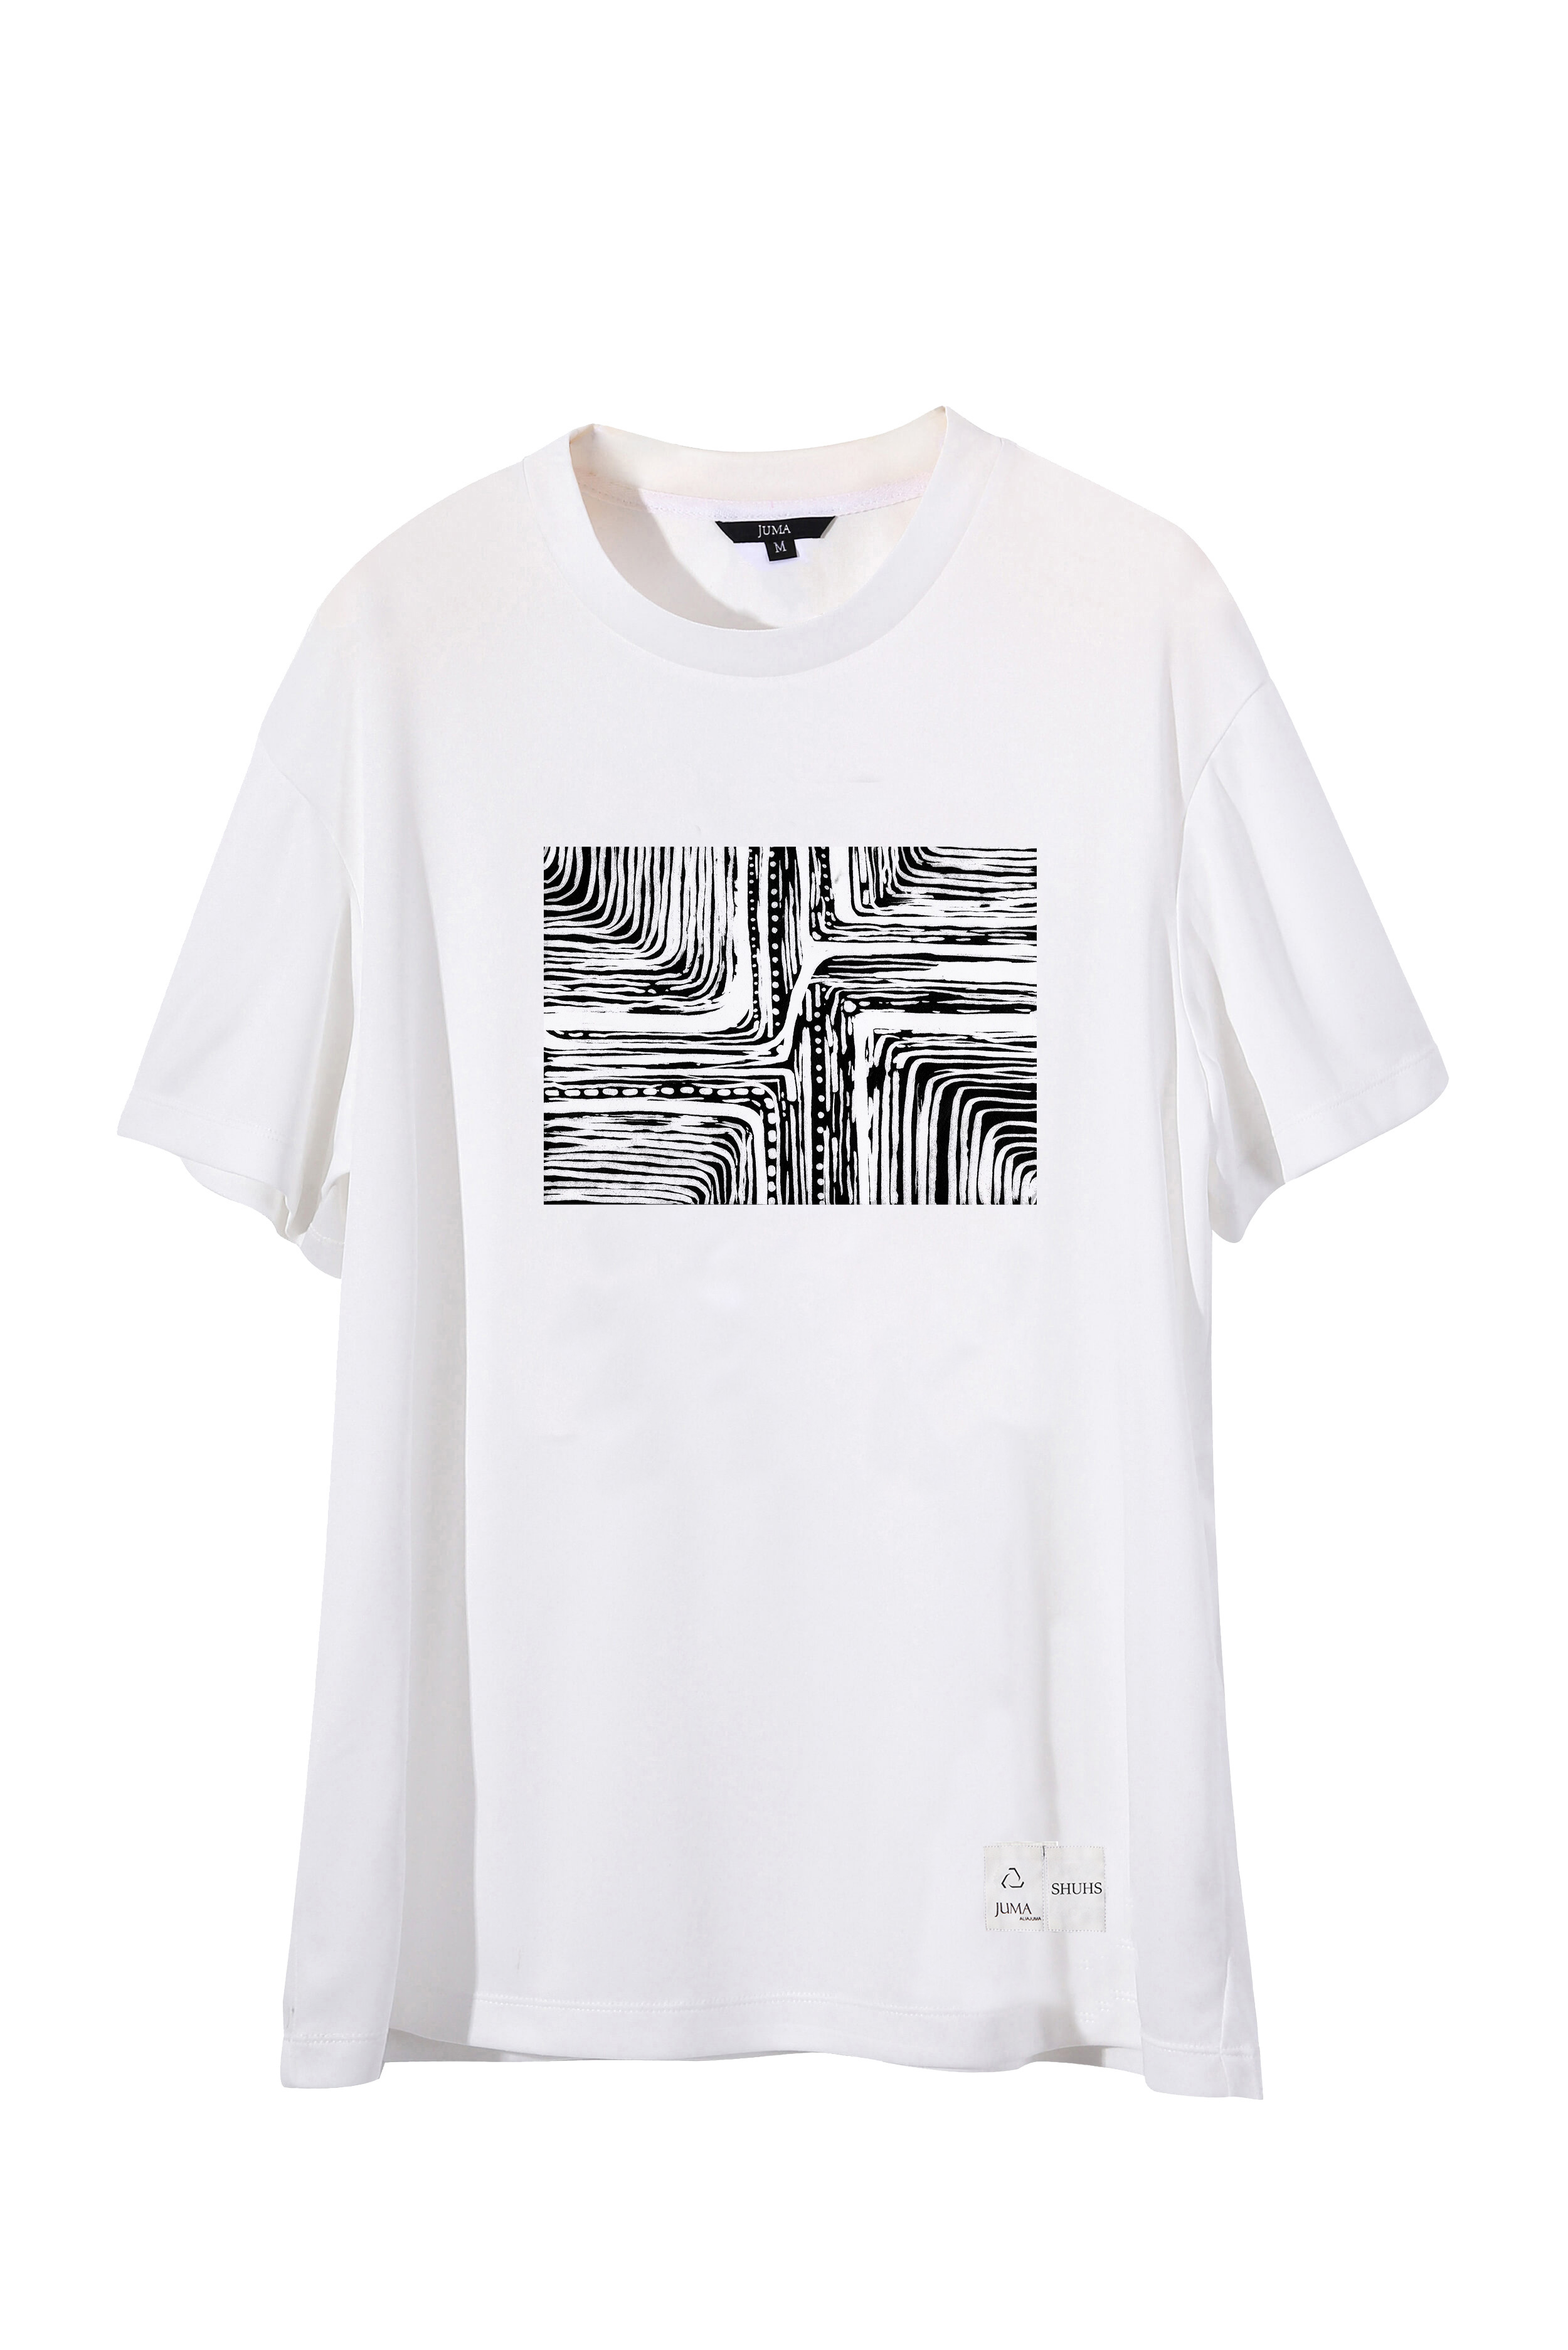 Zayu 印花 2 件 T 恤 - 4 个再生水瓶 - 白色｜Zayu Print 2 T-Shirt - 4 Recycled Water Bottles- White